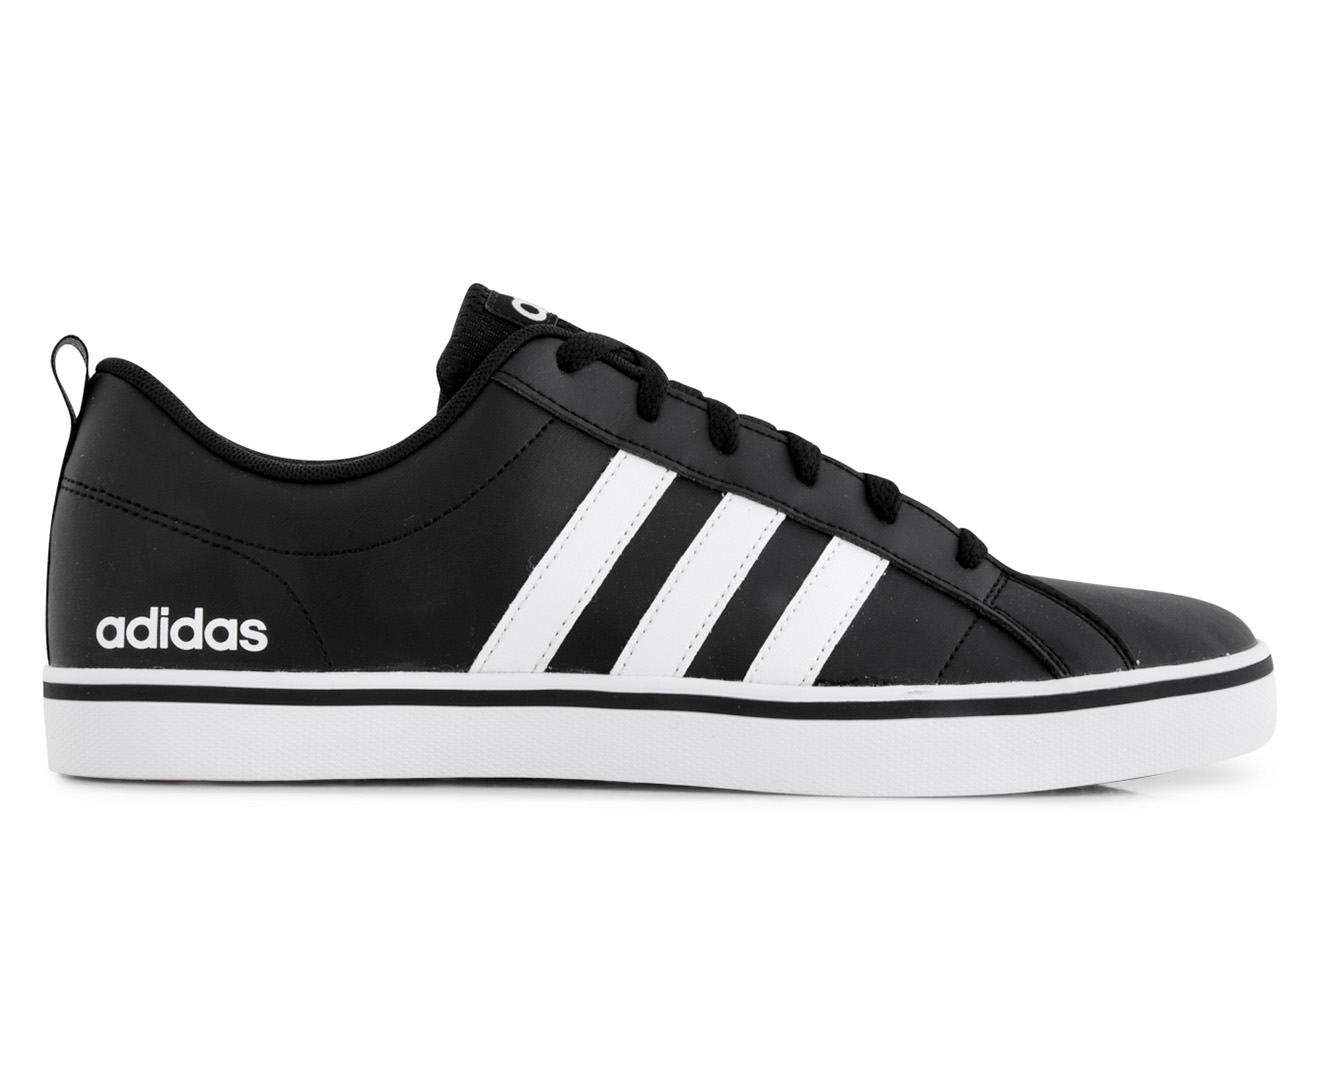 Adidas NEO Men's VS Pace Leather Shoe - Black/White/Scarlet | Catch.co.nz